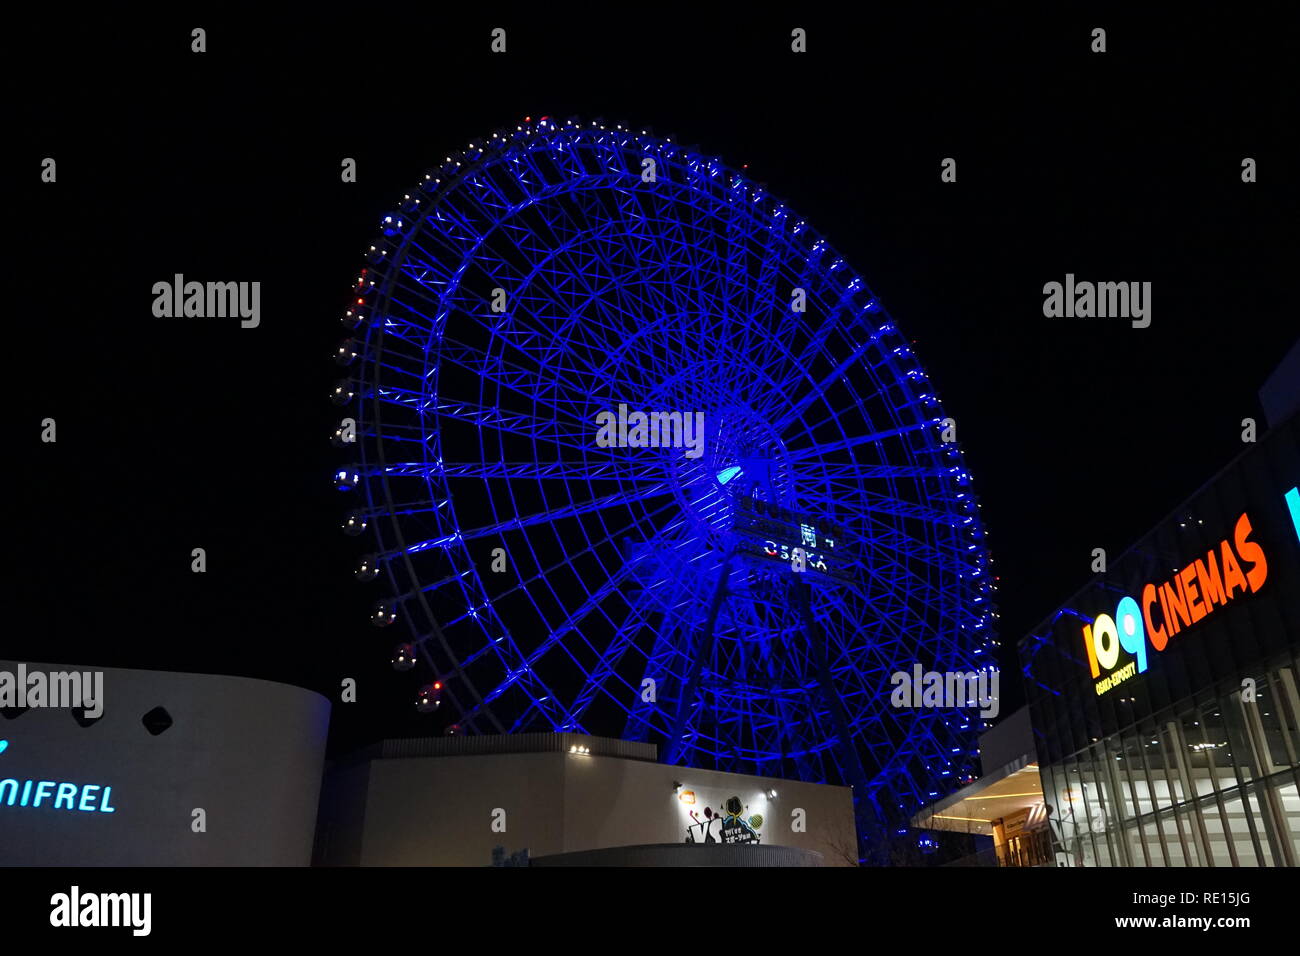 The night view of Redhorse Osaka Wheel at EXPOCITY in Osaka. Stock Photo